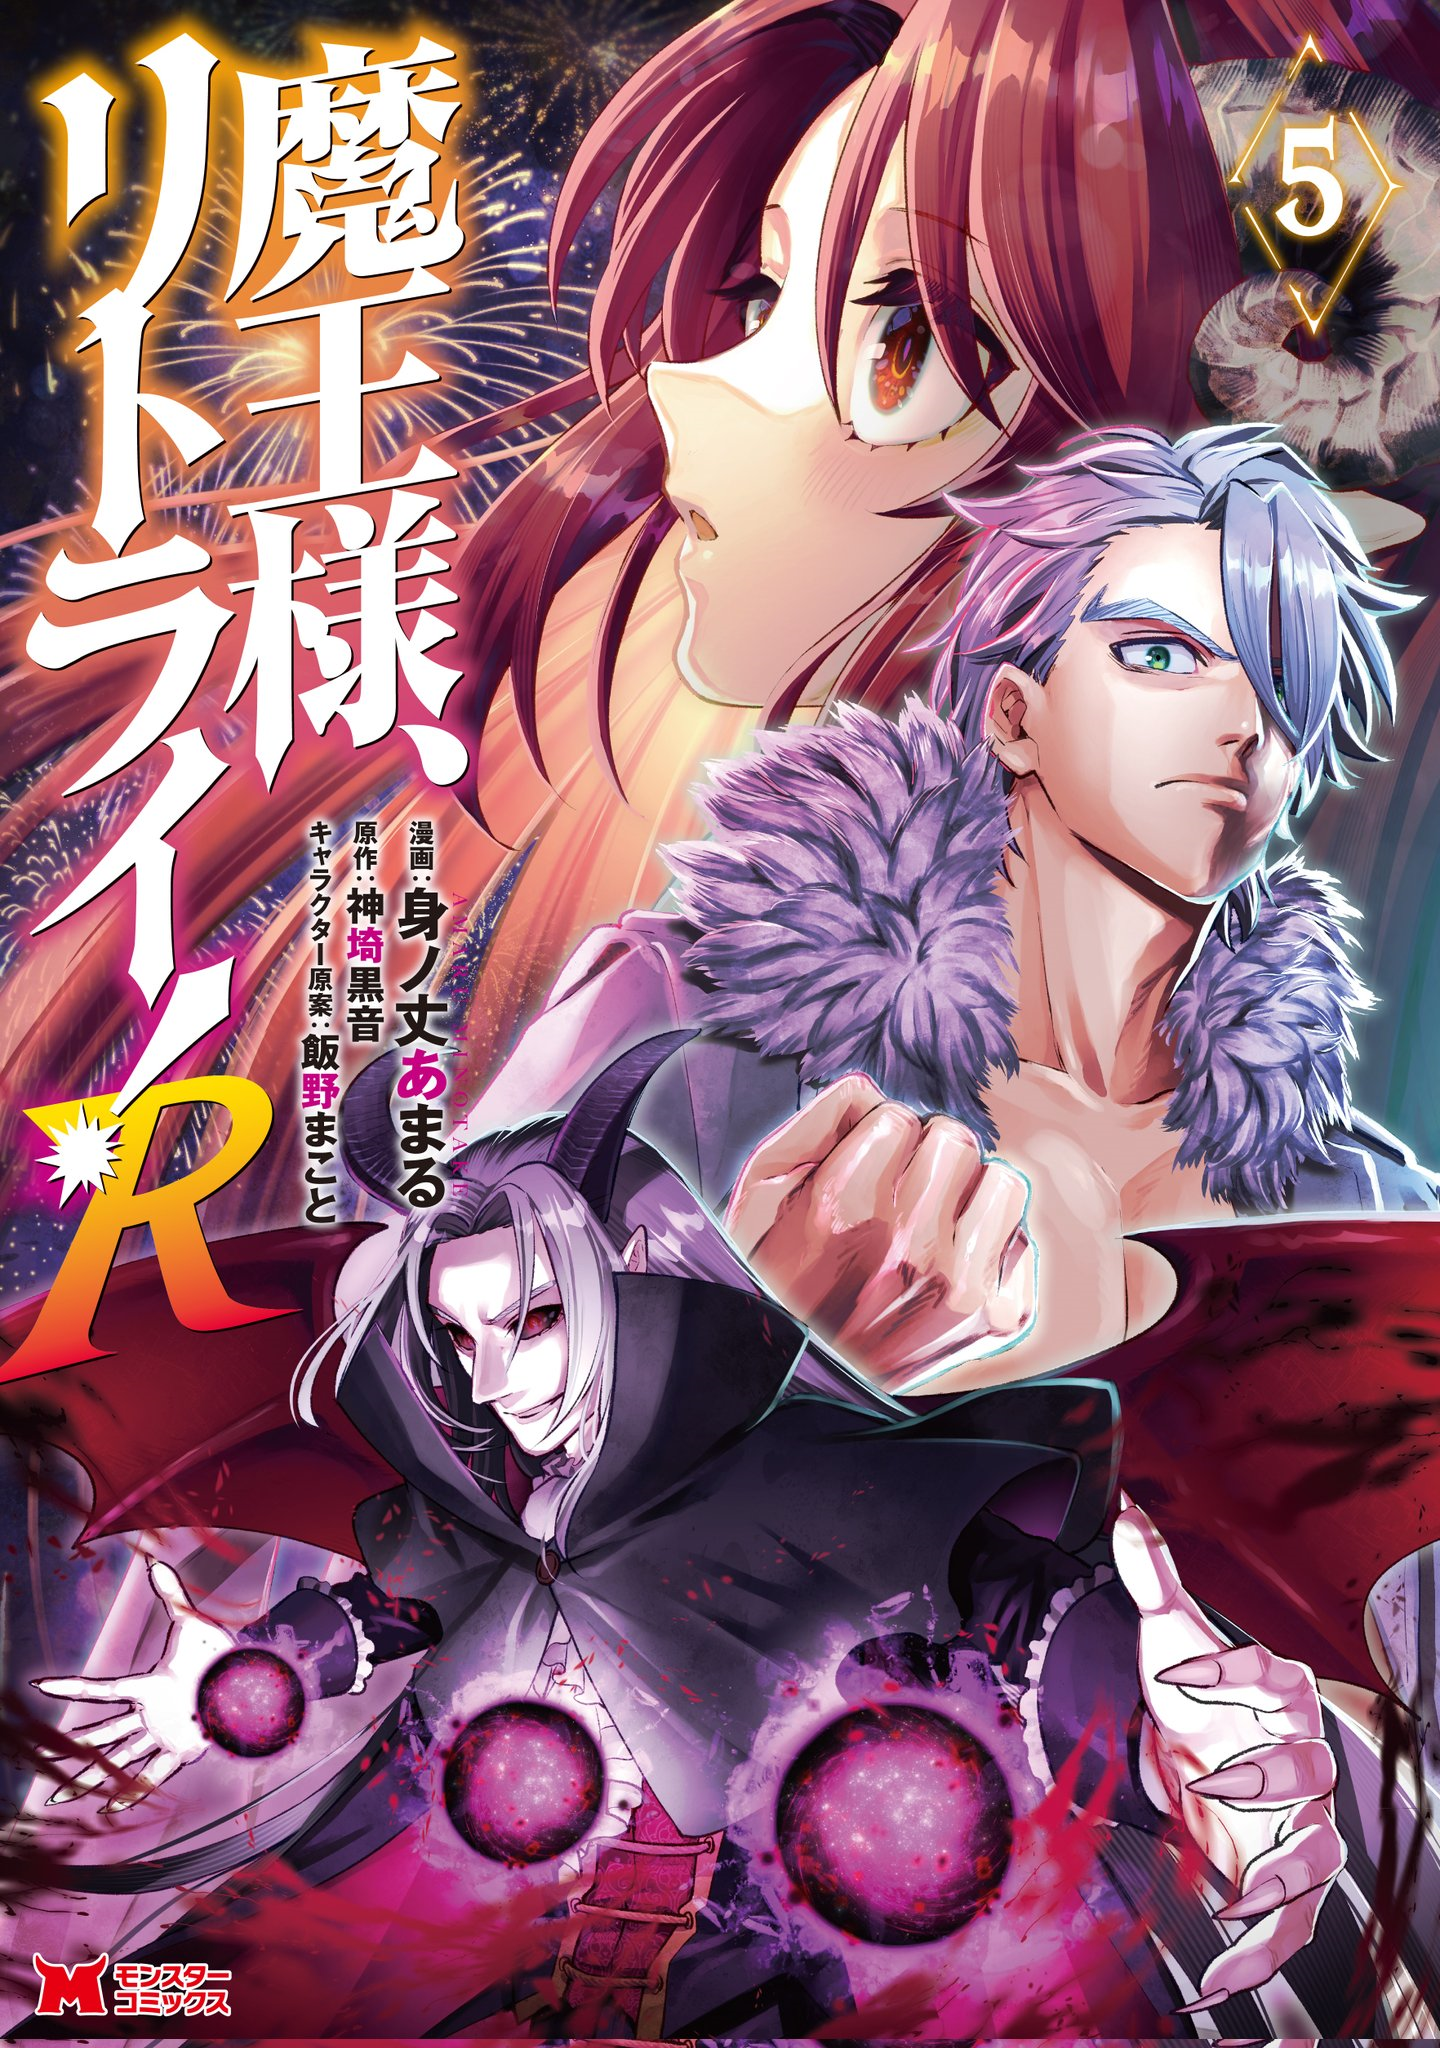 Manga Volume 05 R, Demon Lord, Retry! Wiki